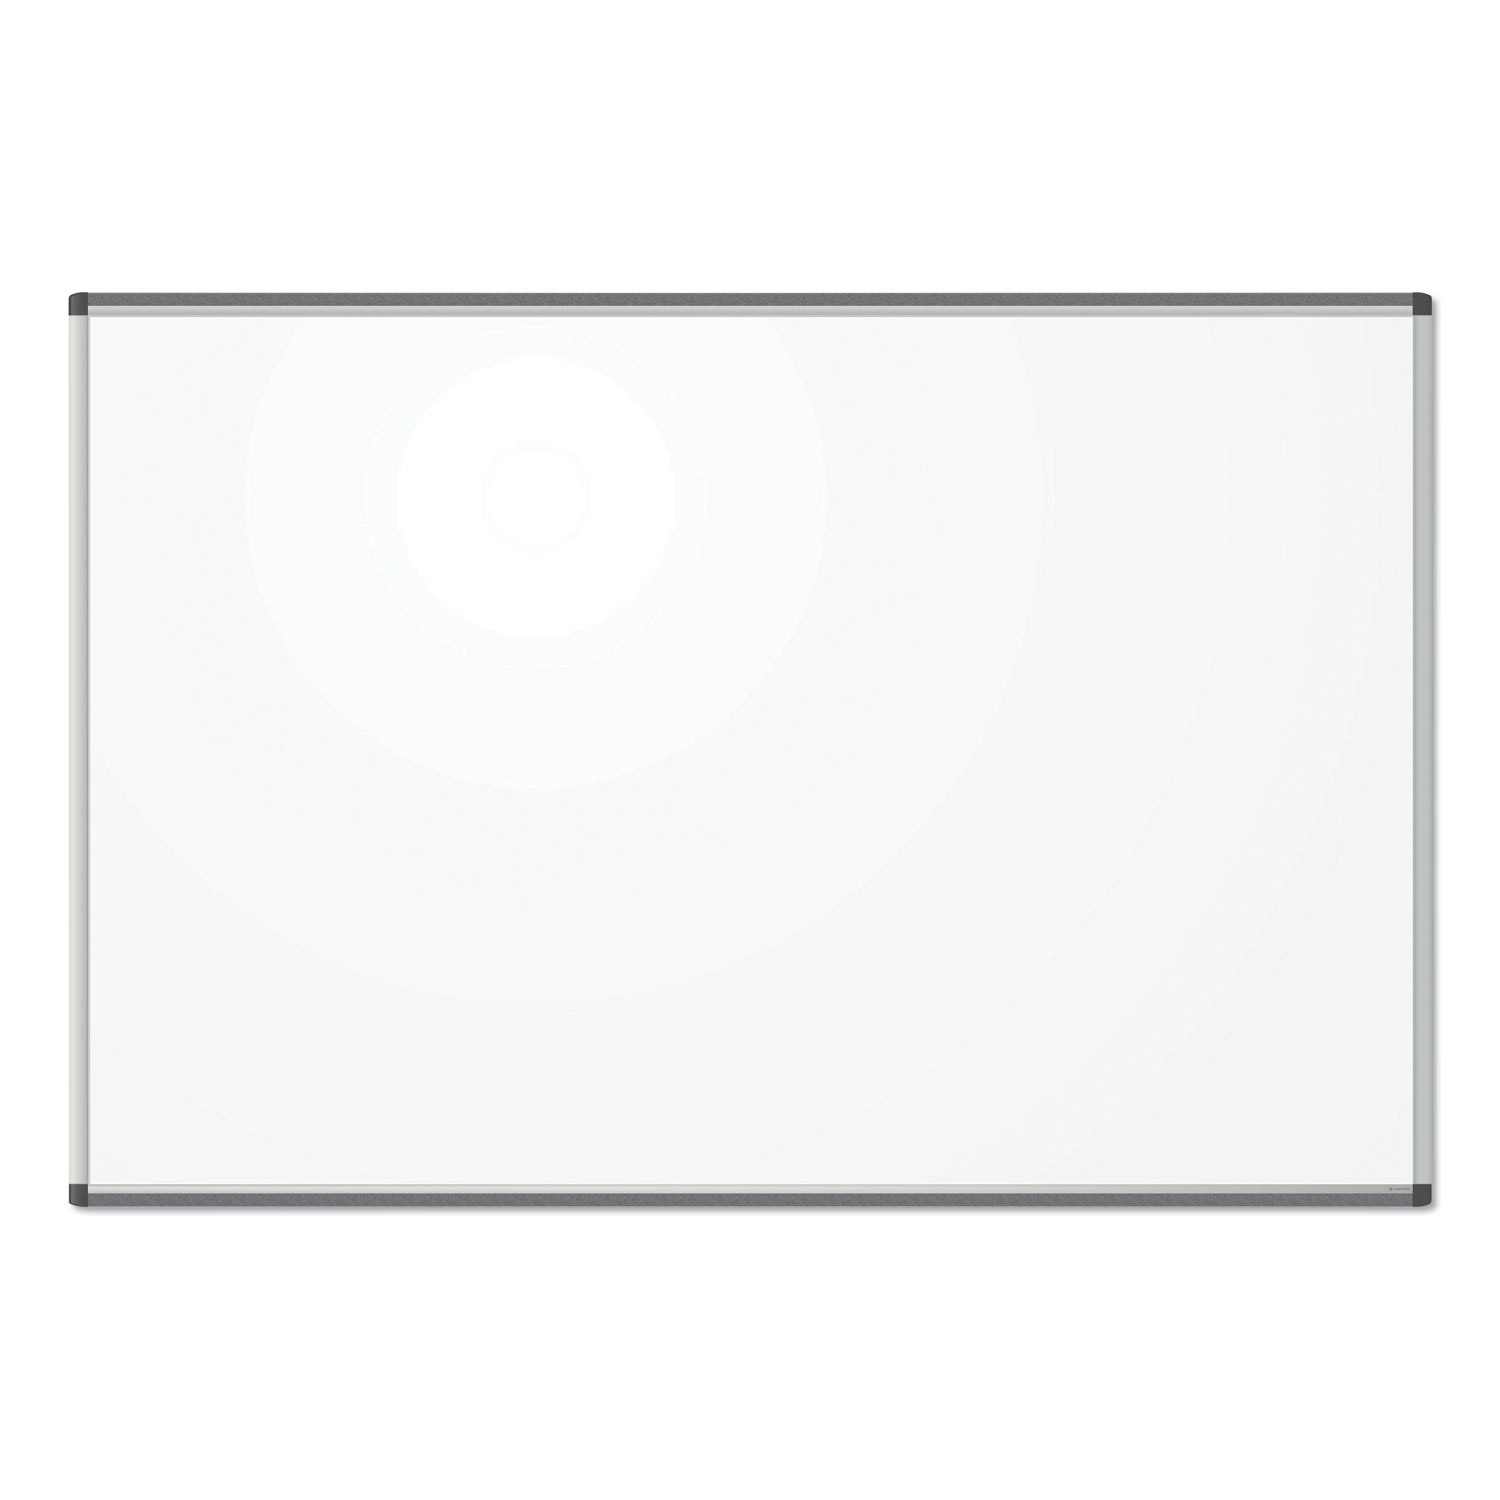  U Brands 2808U00-01 PINIT Magnetic Dry Erase Board, 72 x 48, White (UBR2808U0001) 